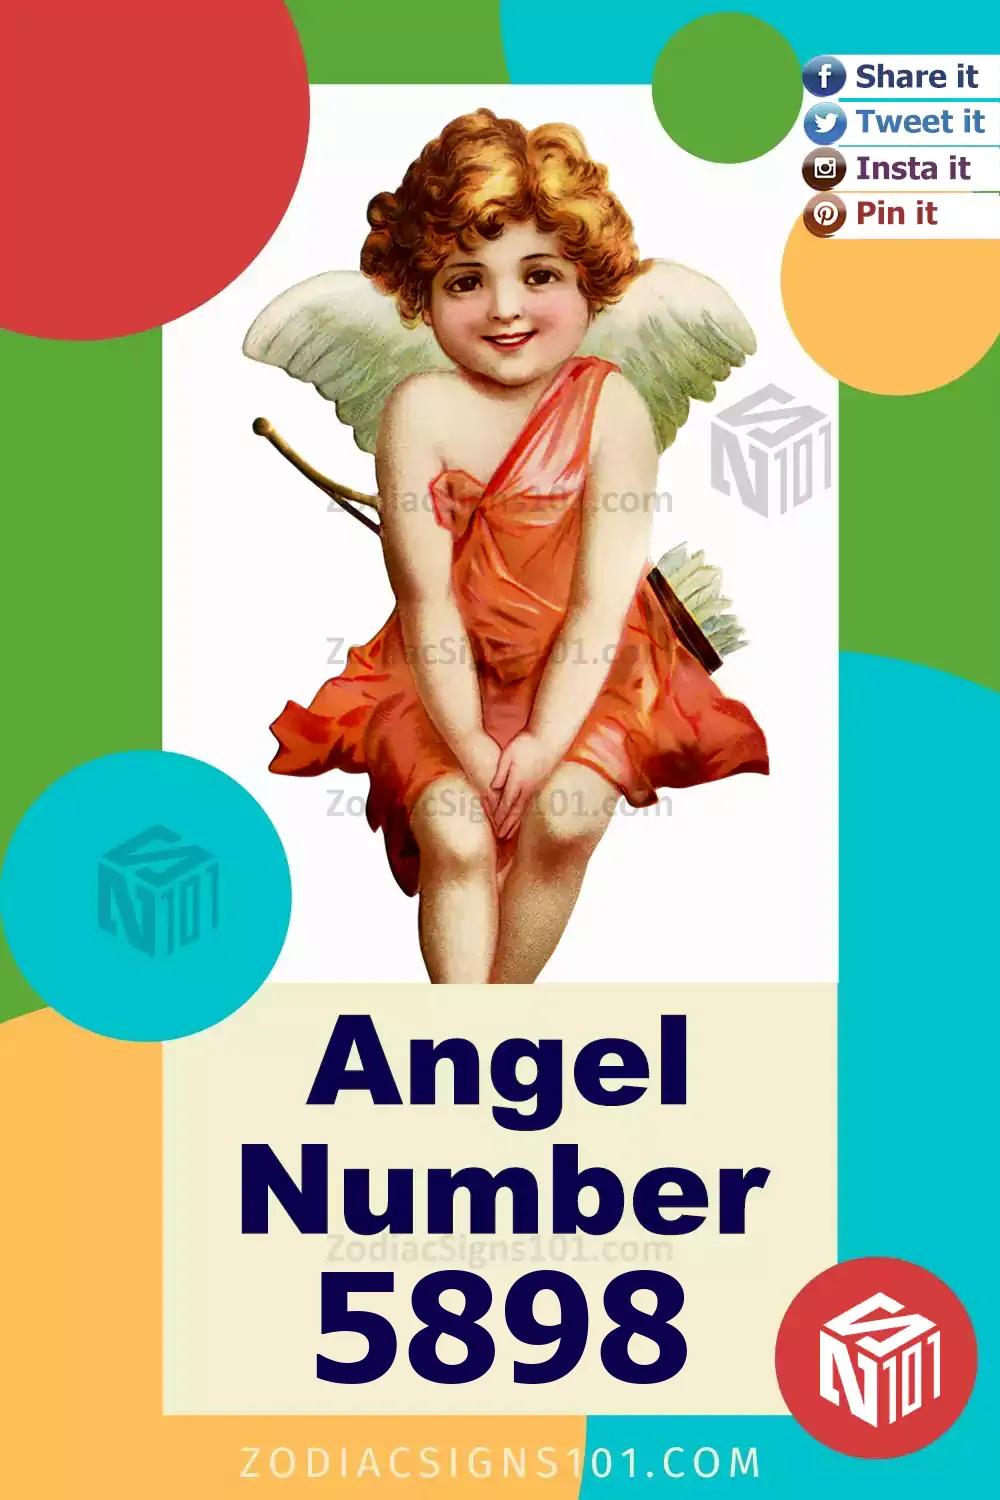 5898-Angel-Number-Meaning.jpg